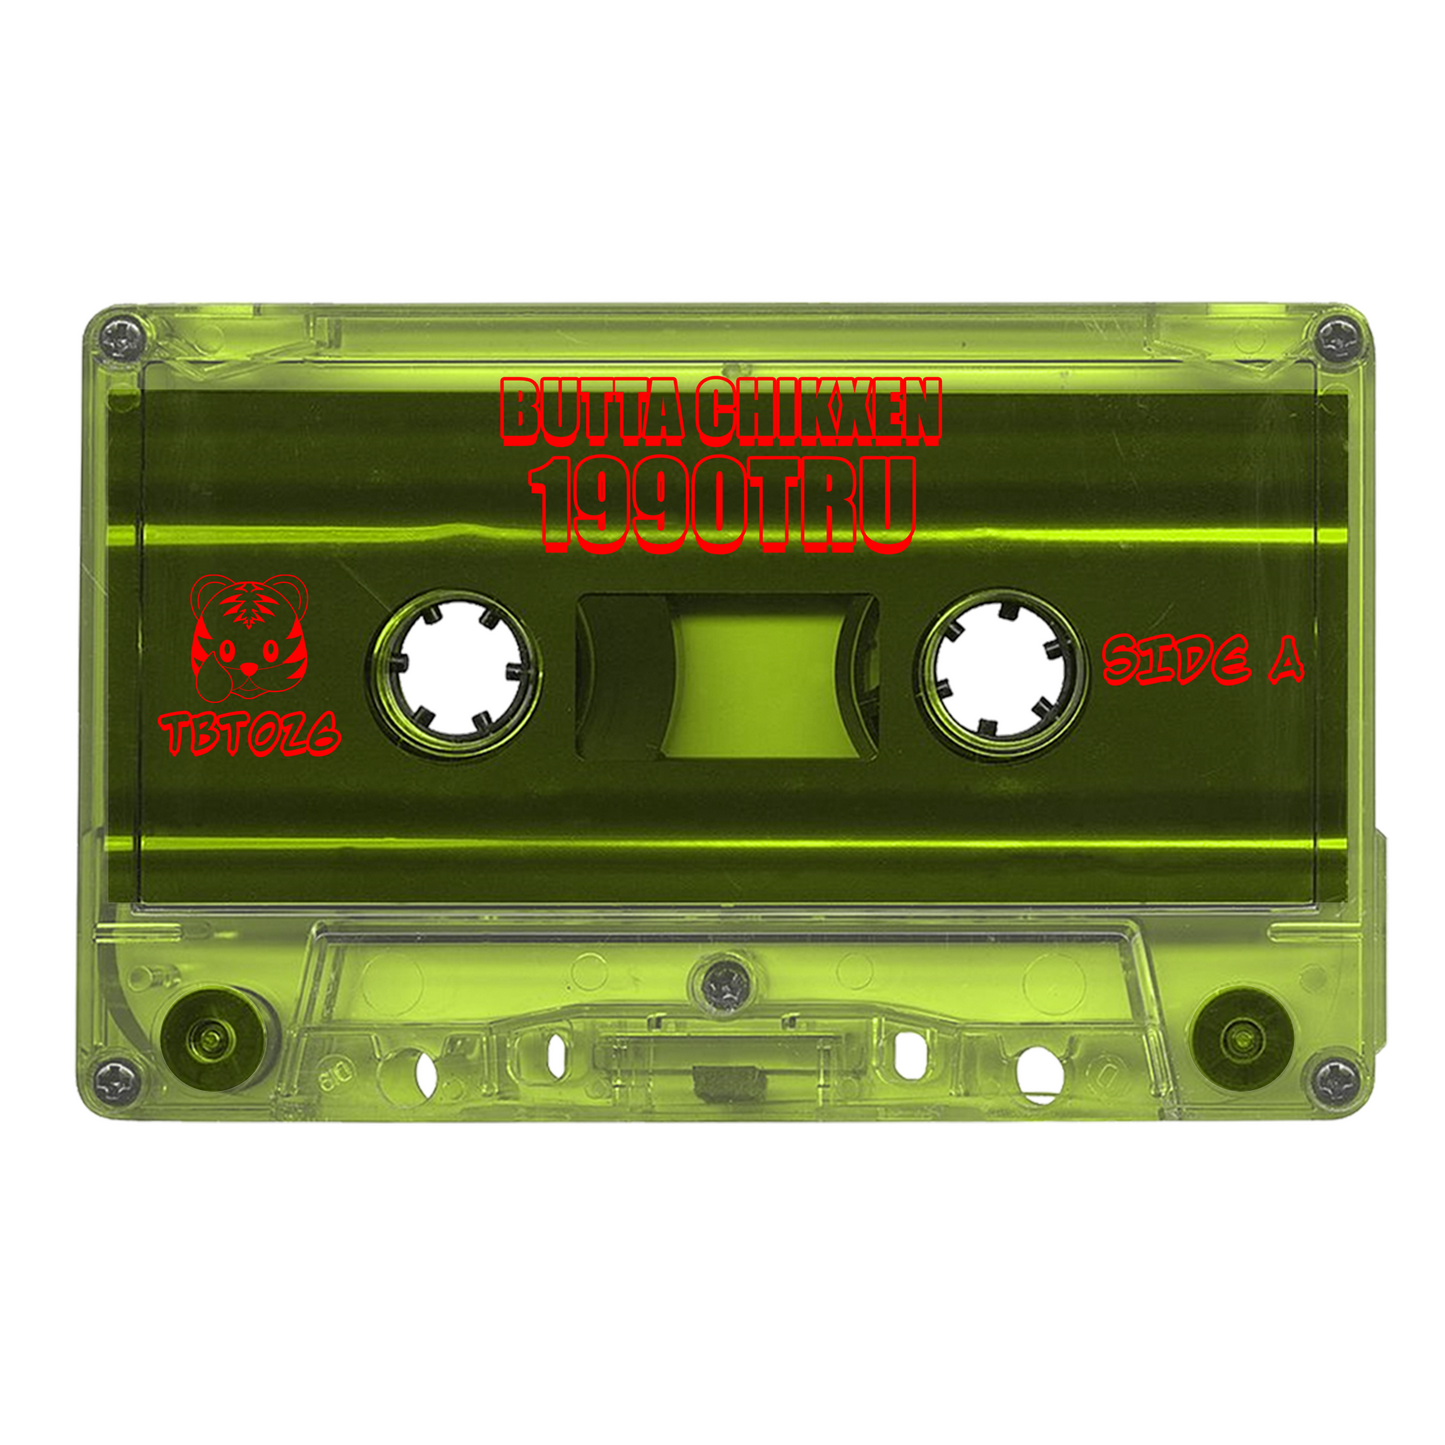 Butta Chikxen - "1990Tru" Limited Edition Cassette Tape